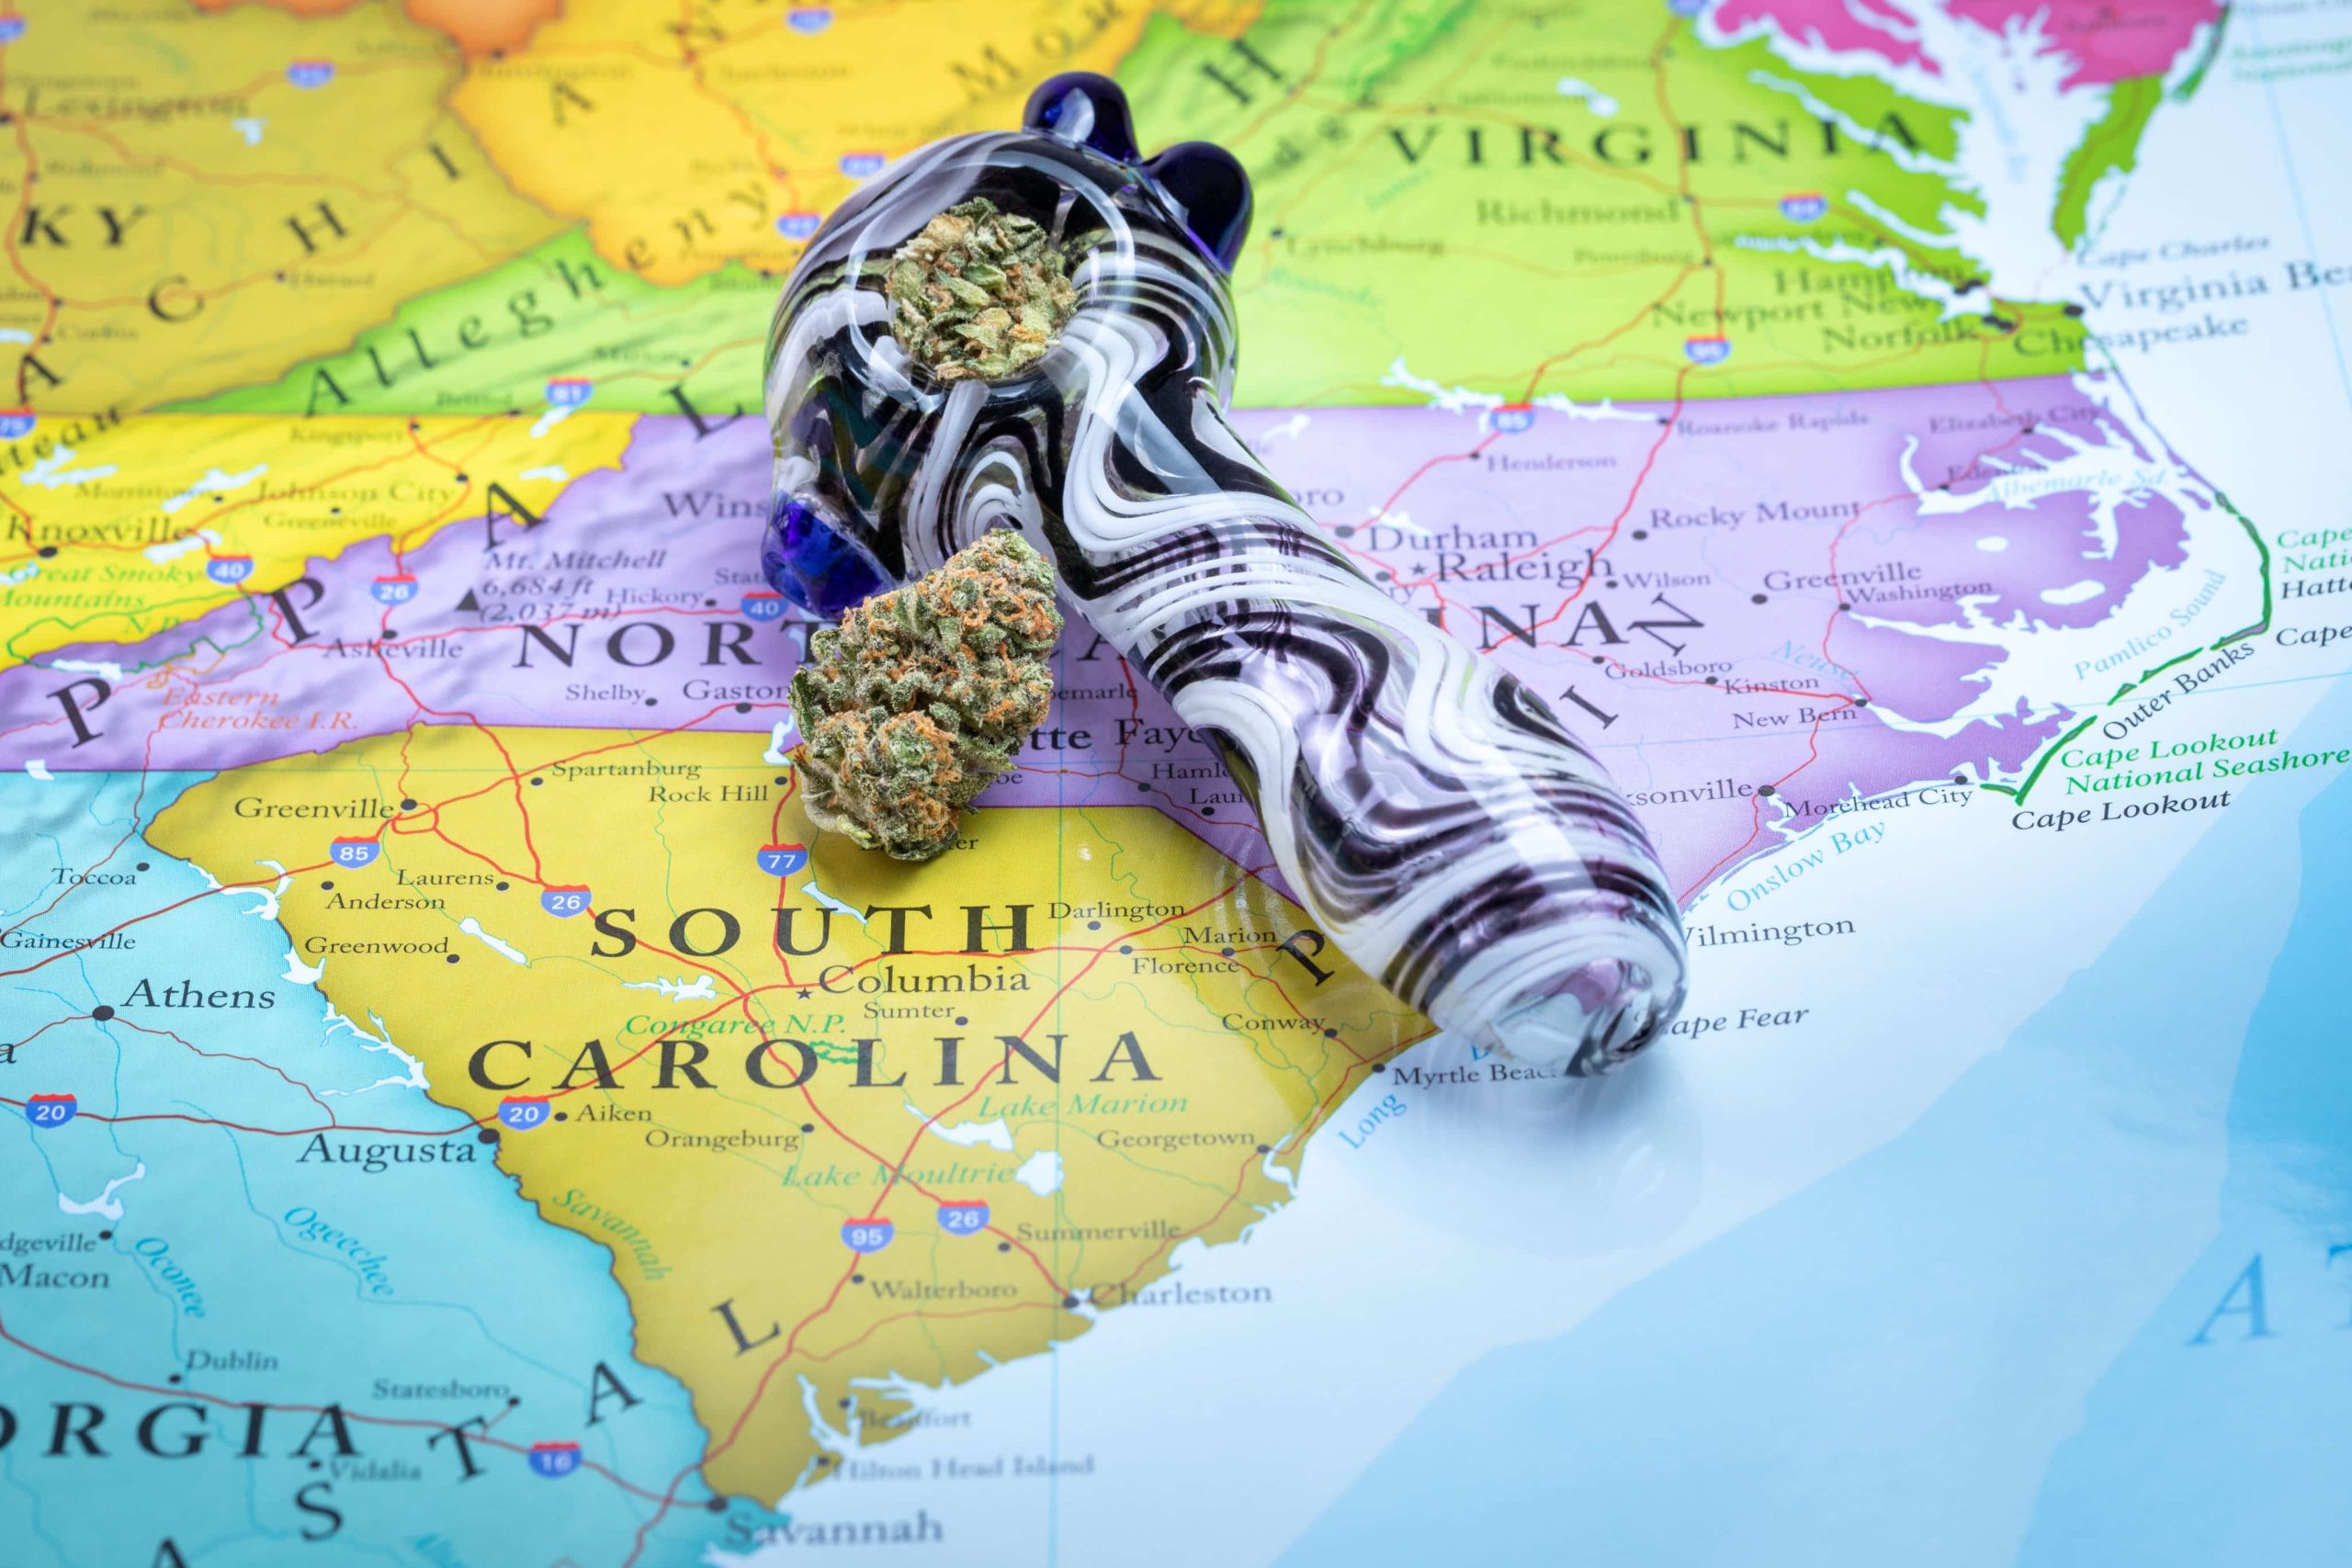 Medical Pot on the 2023 Agenda for South Carolina